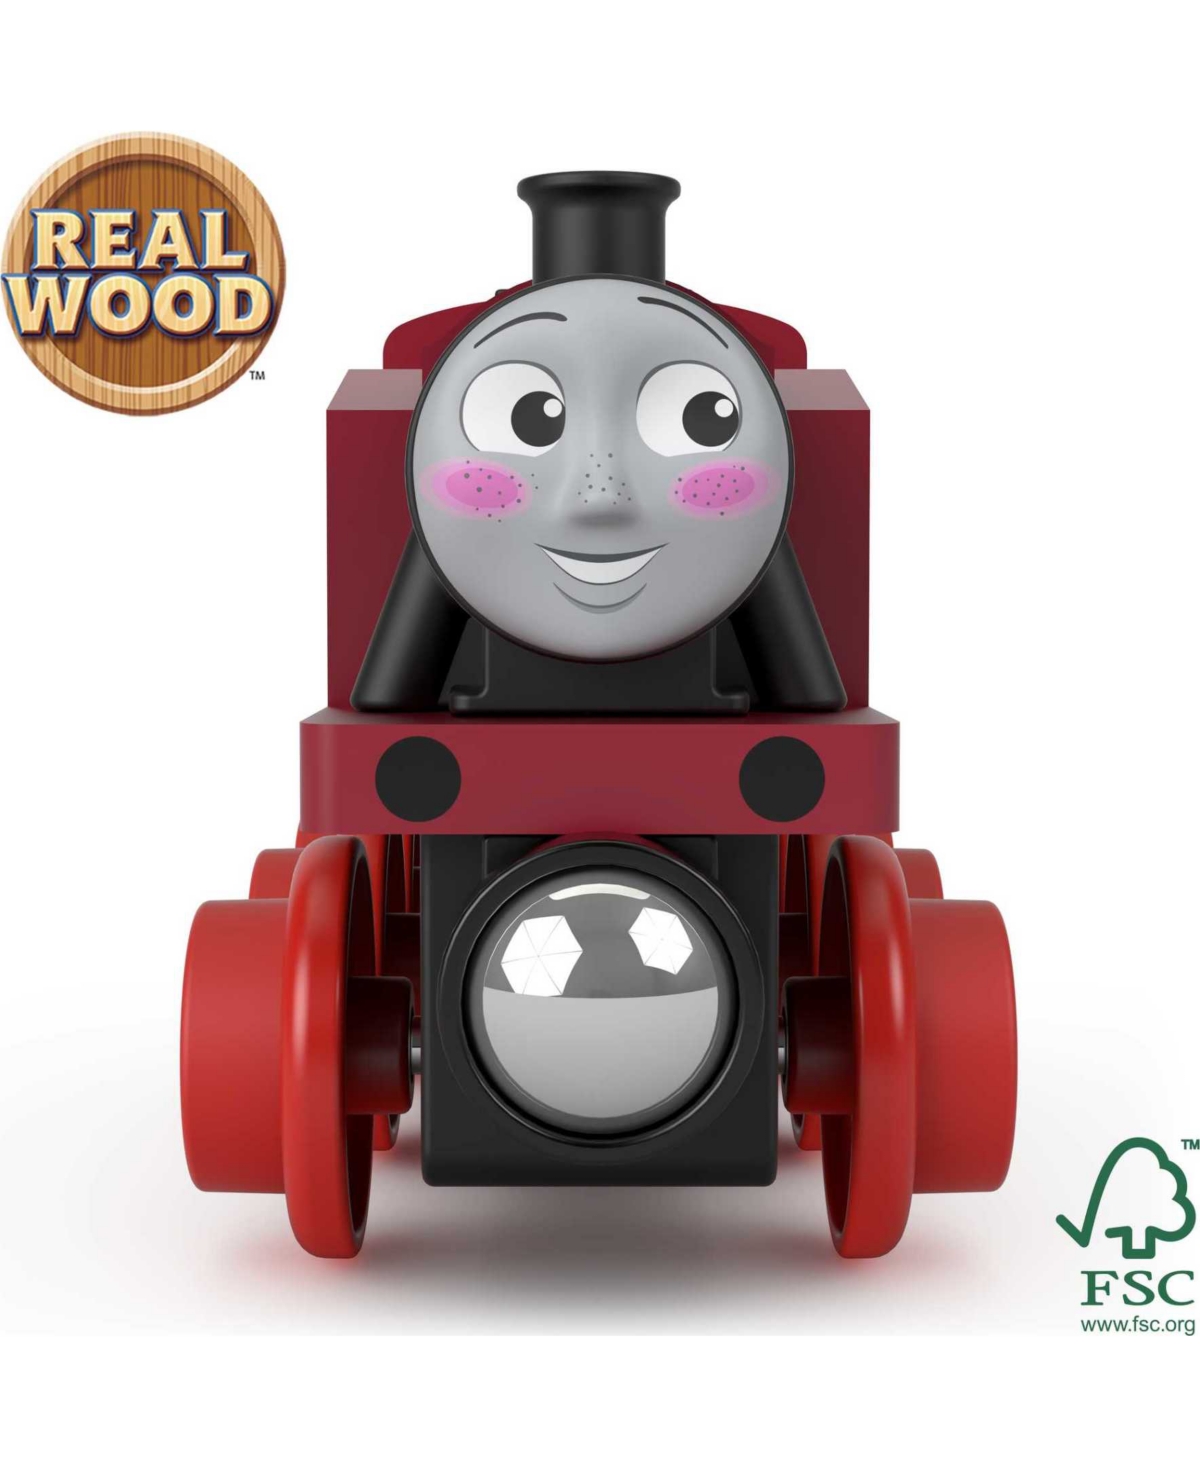 Shop Fisher Price Fisher-price Thomas & Friends Wooden Railway Rosie Engine In Multi